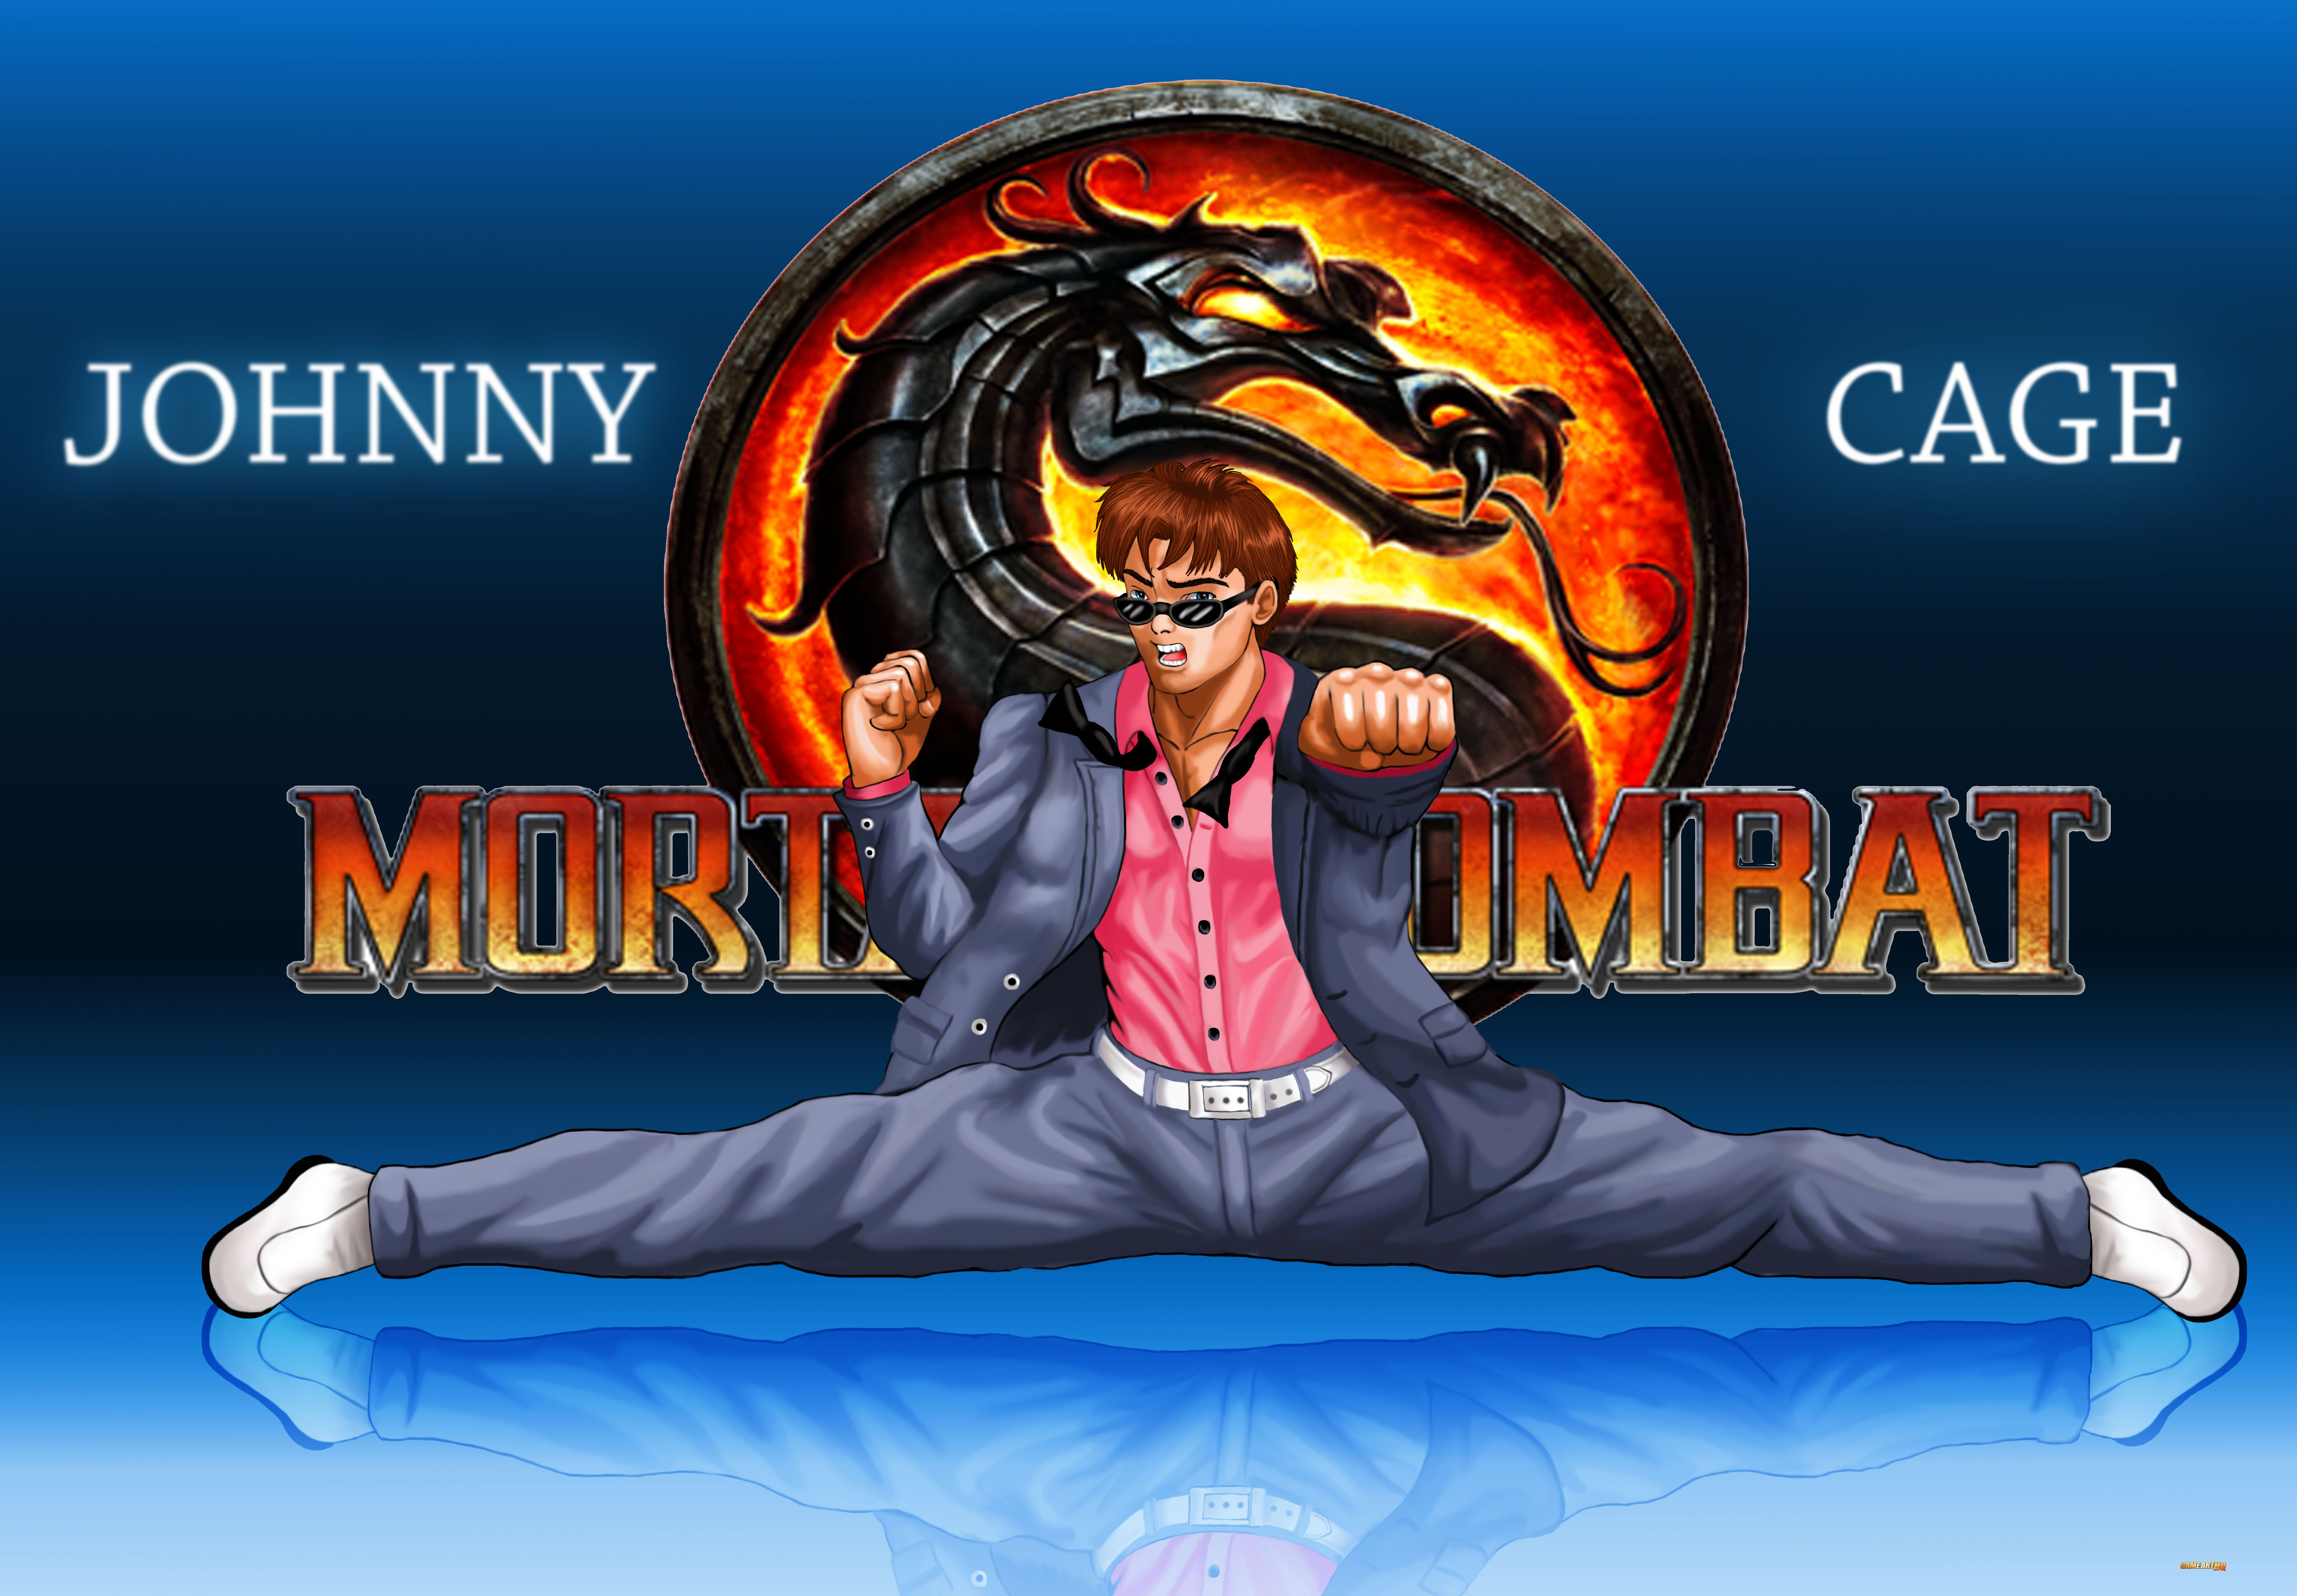 Johnny Cage Mortal Kombat 9 Alternate